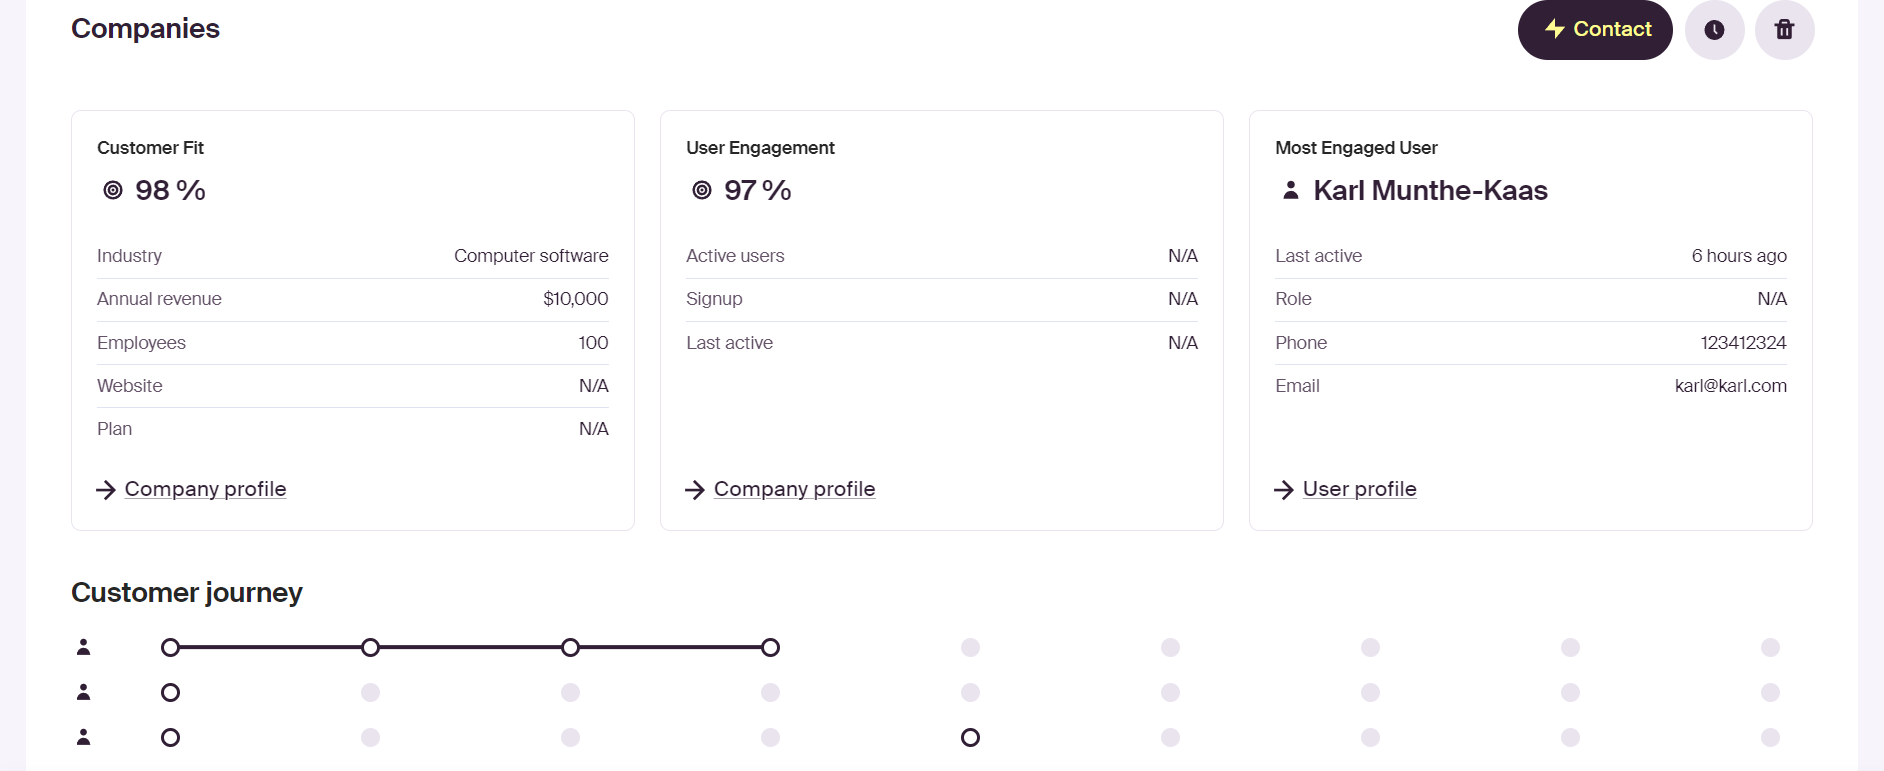 Breyta app interface showing Customer Fit Score